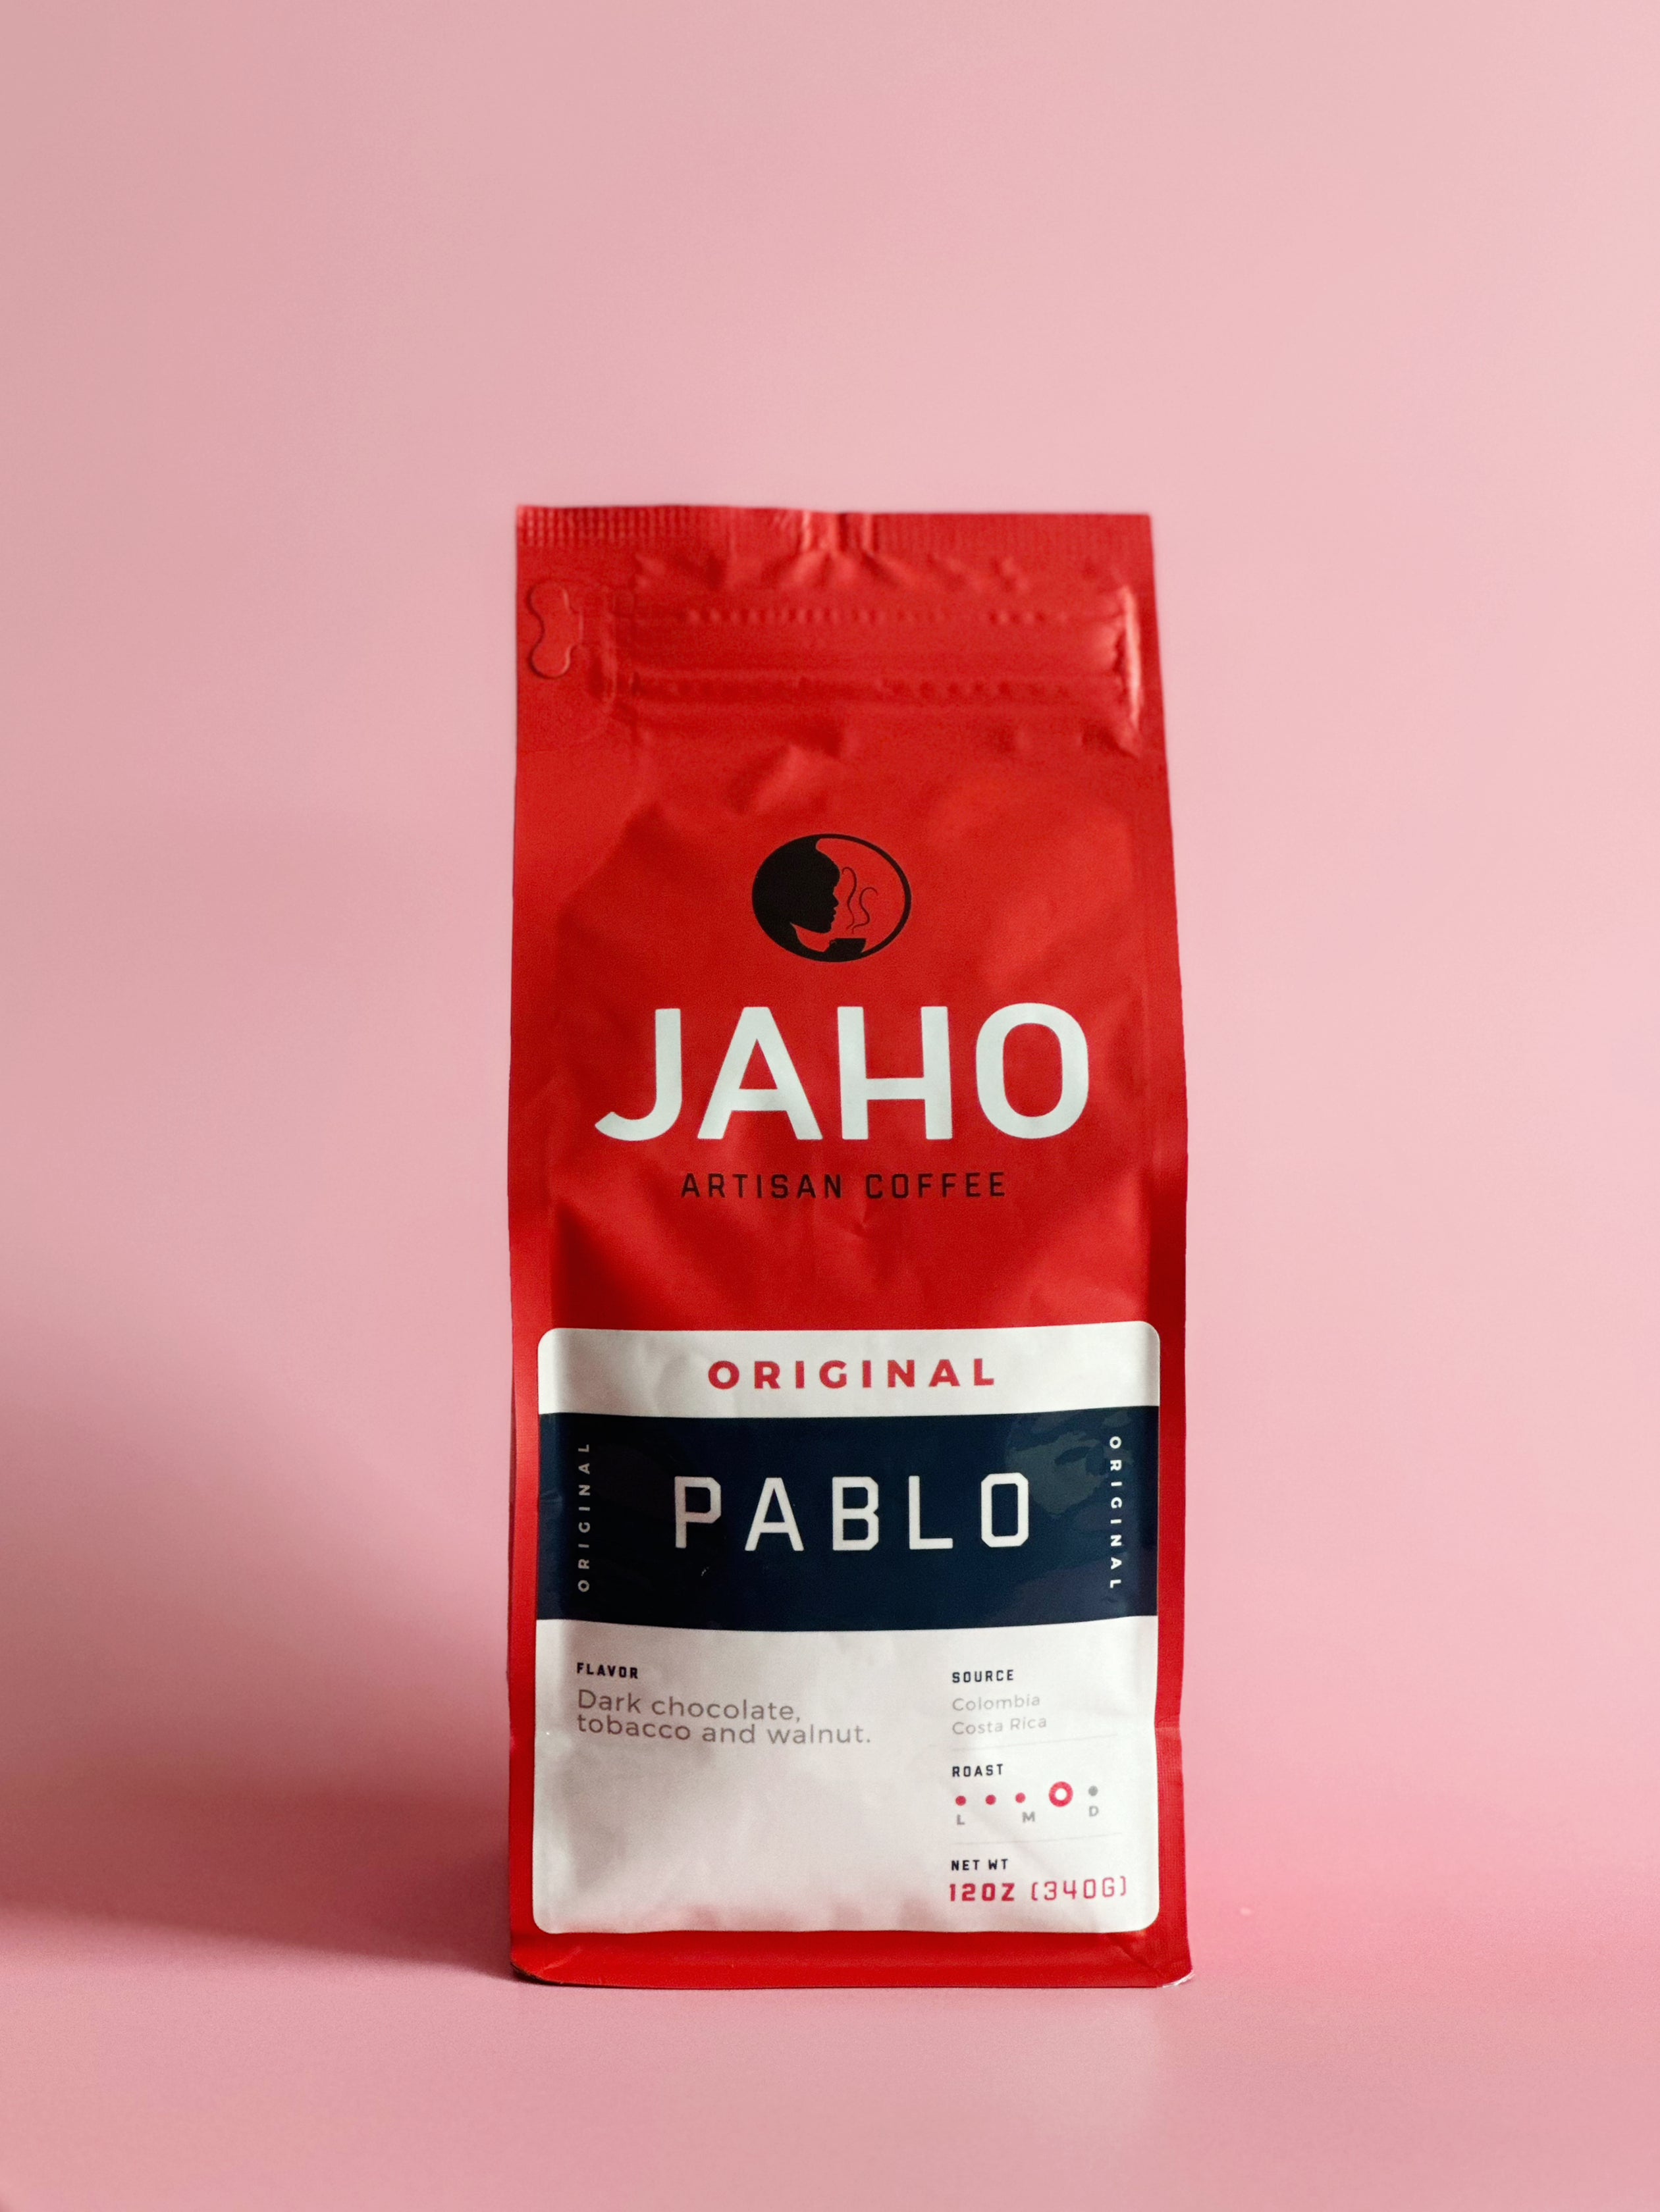 Pablo - Jaho Coffee Roaster